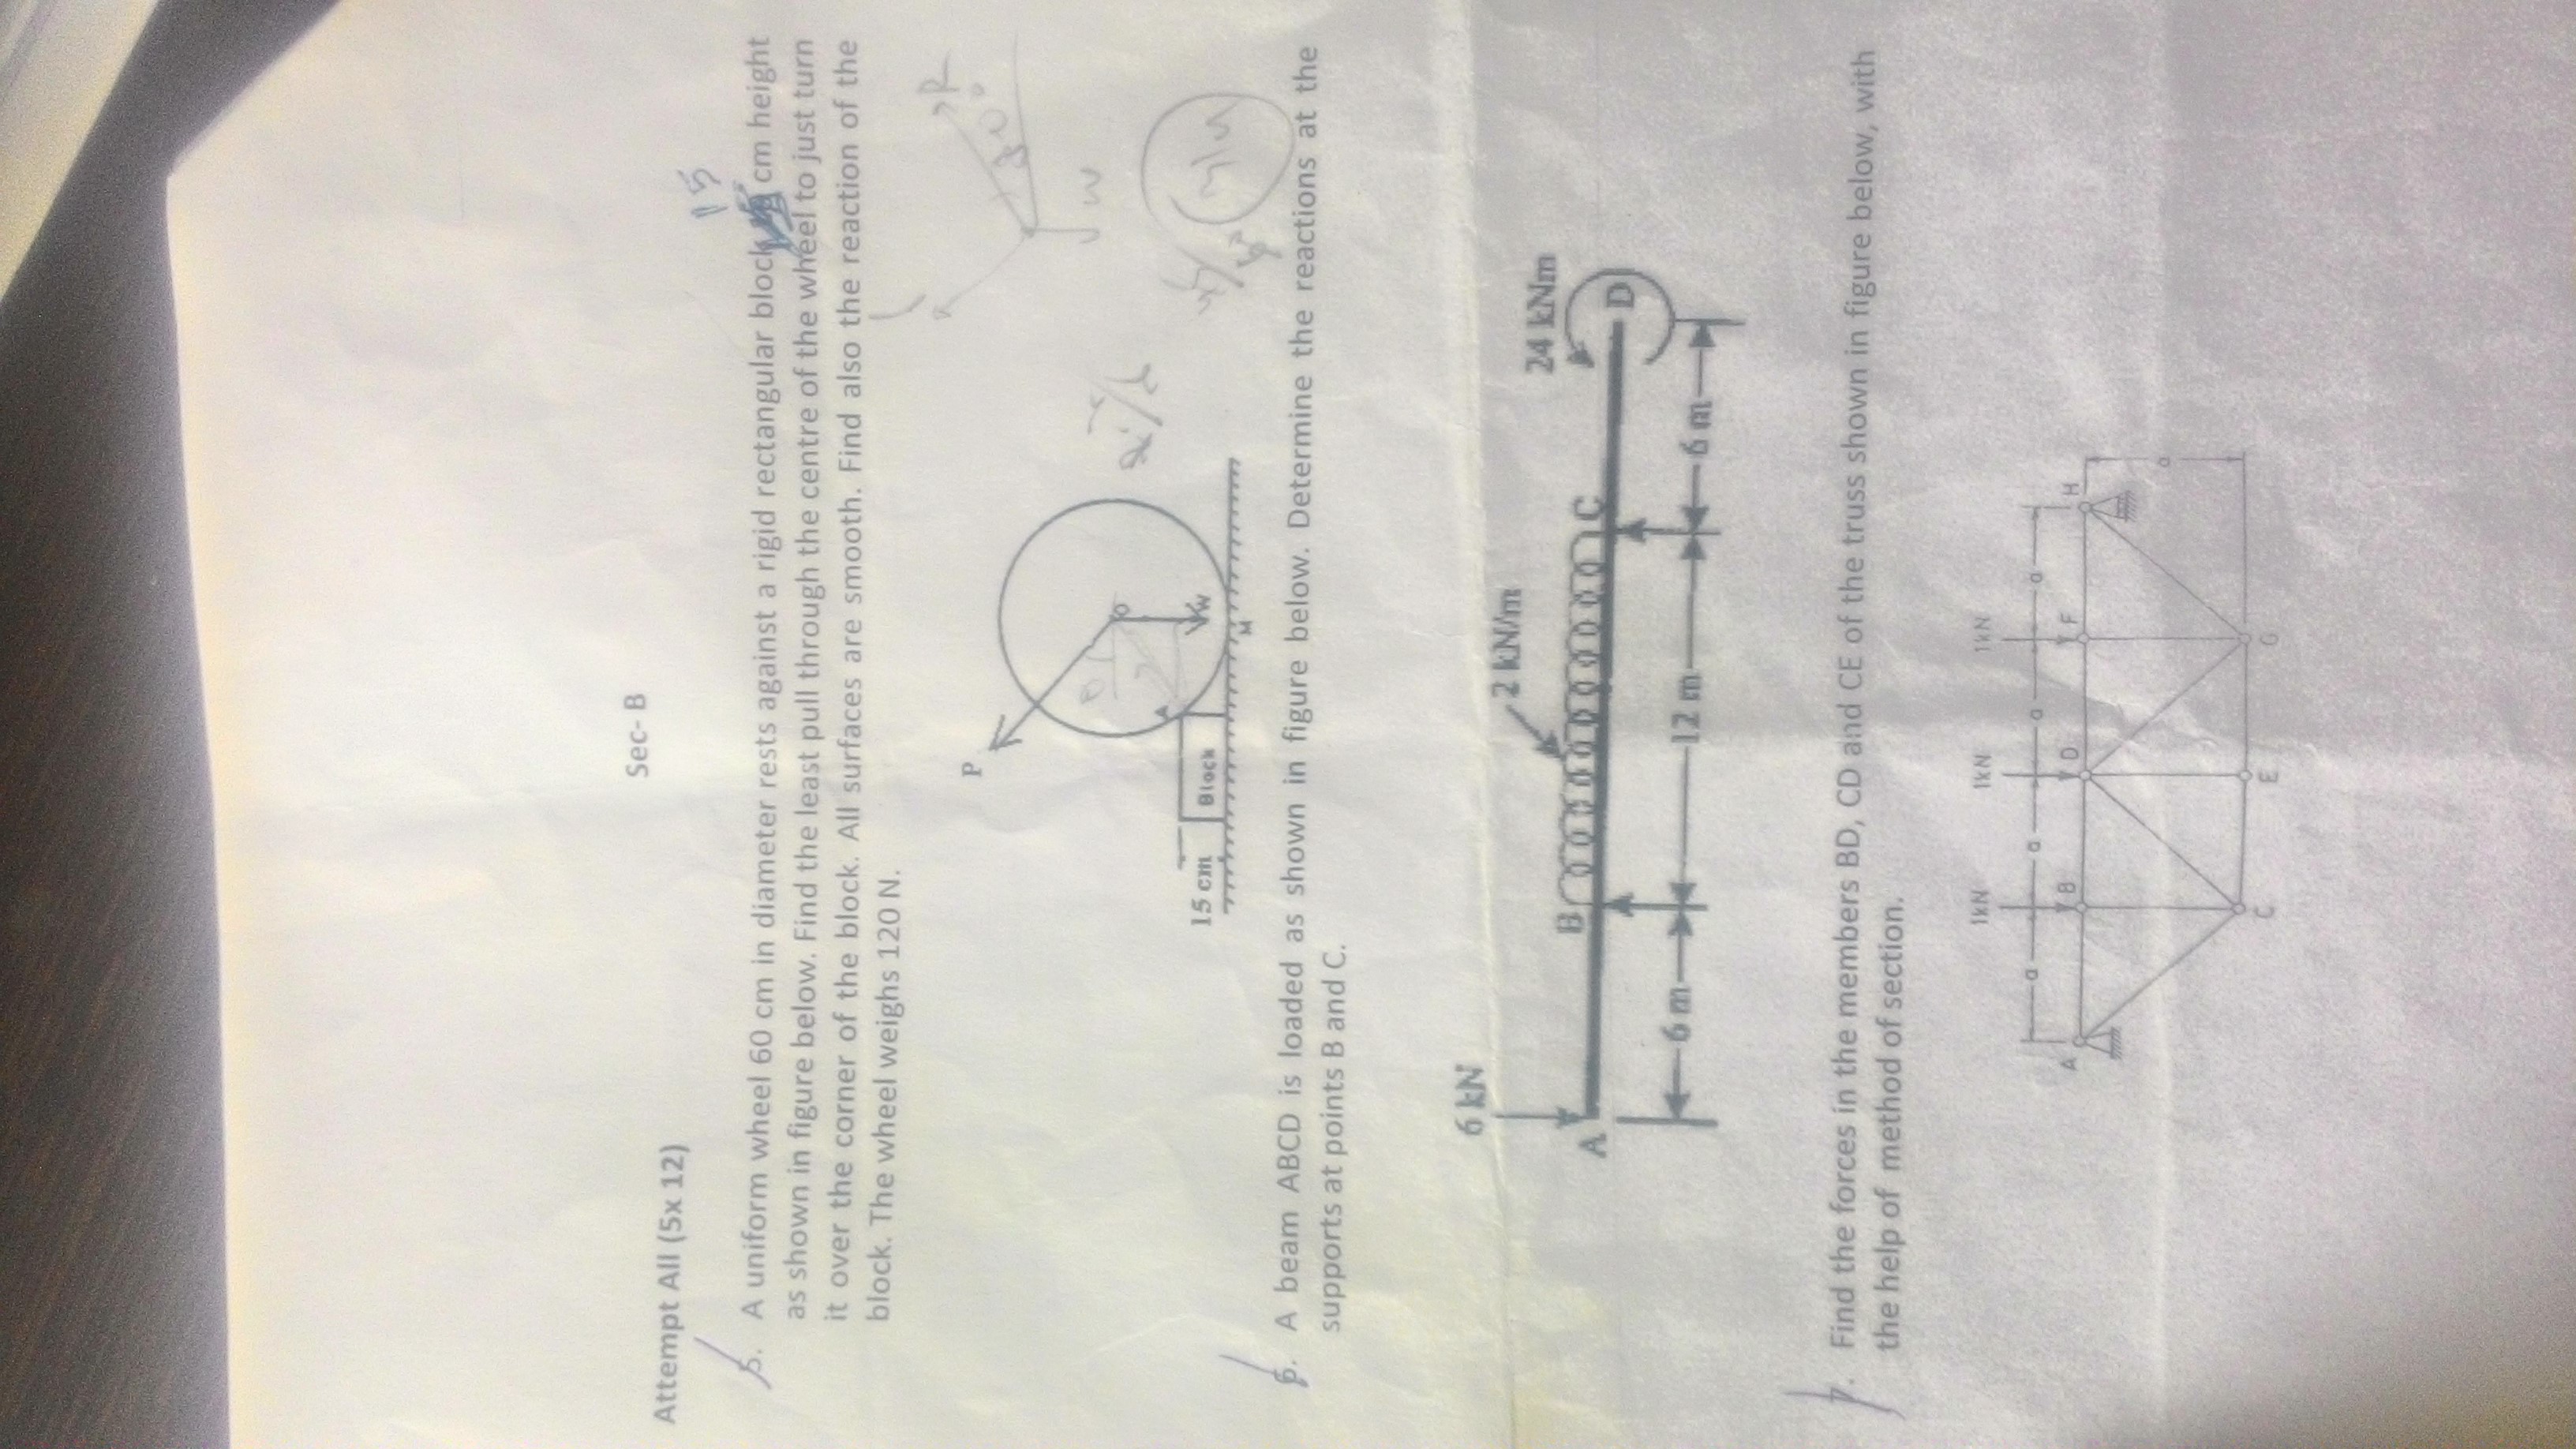 Engineering Mechanics B.Tech (Question Papers)-P_20171001_135356_HDR.jpg